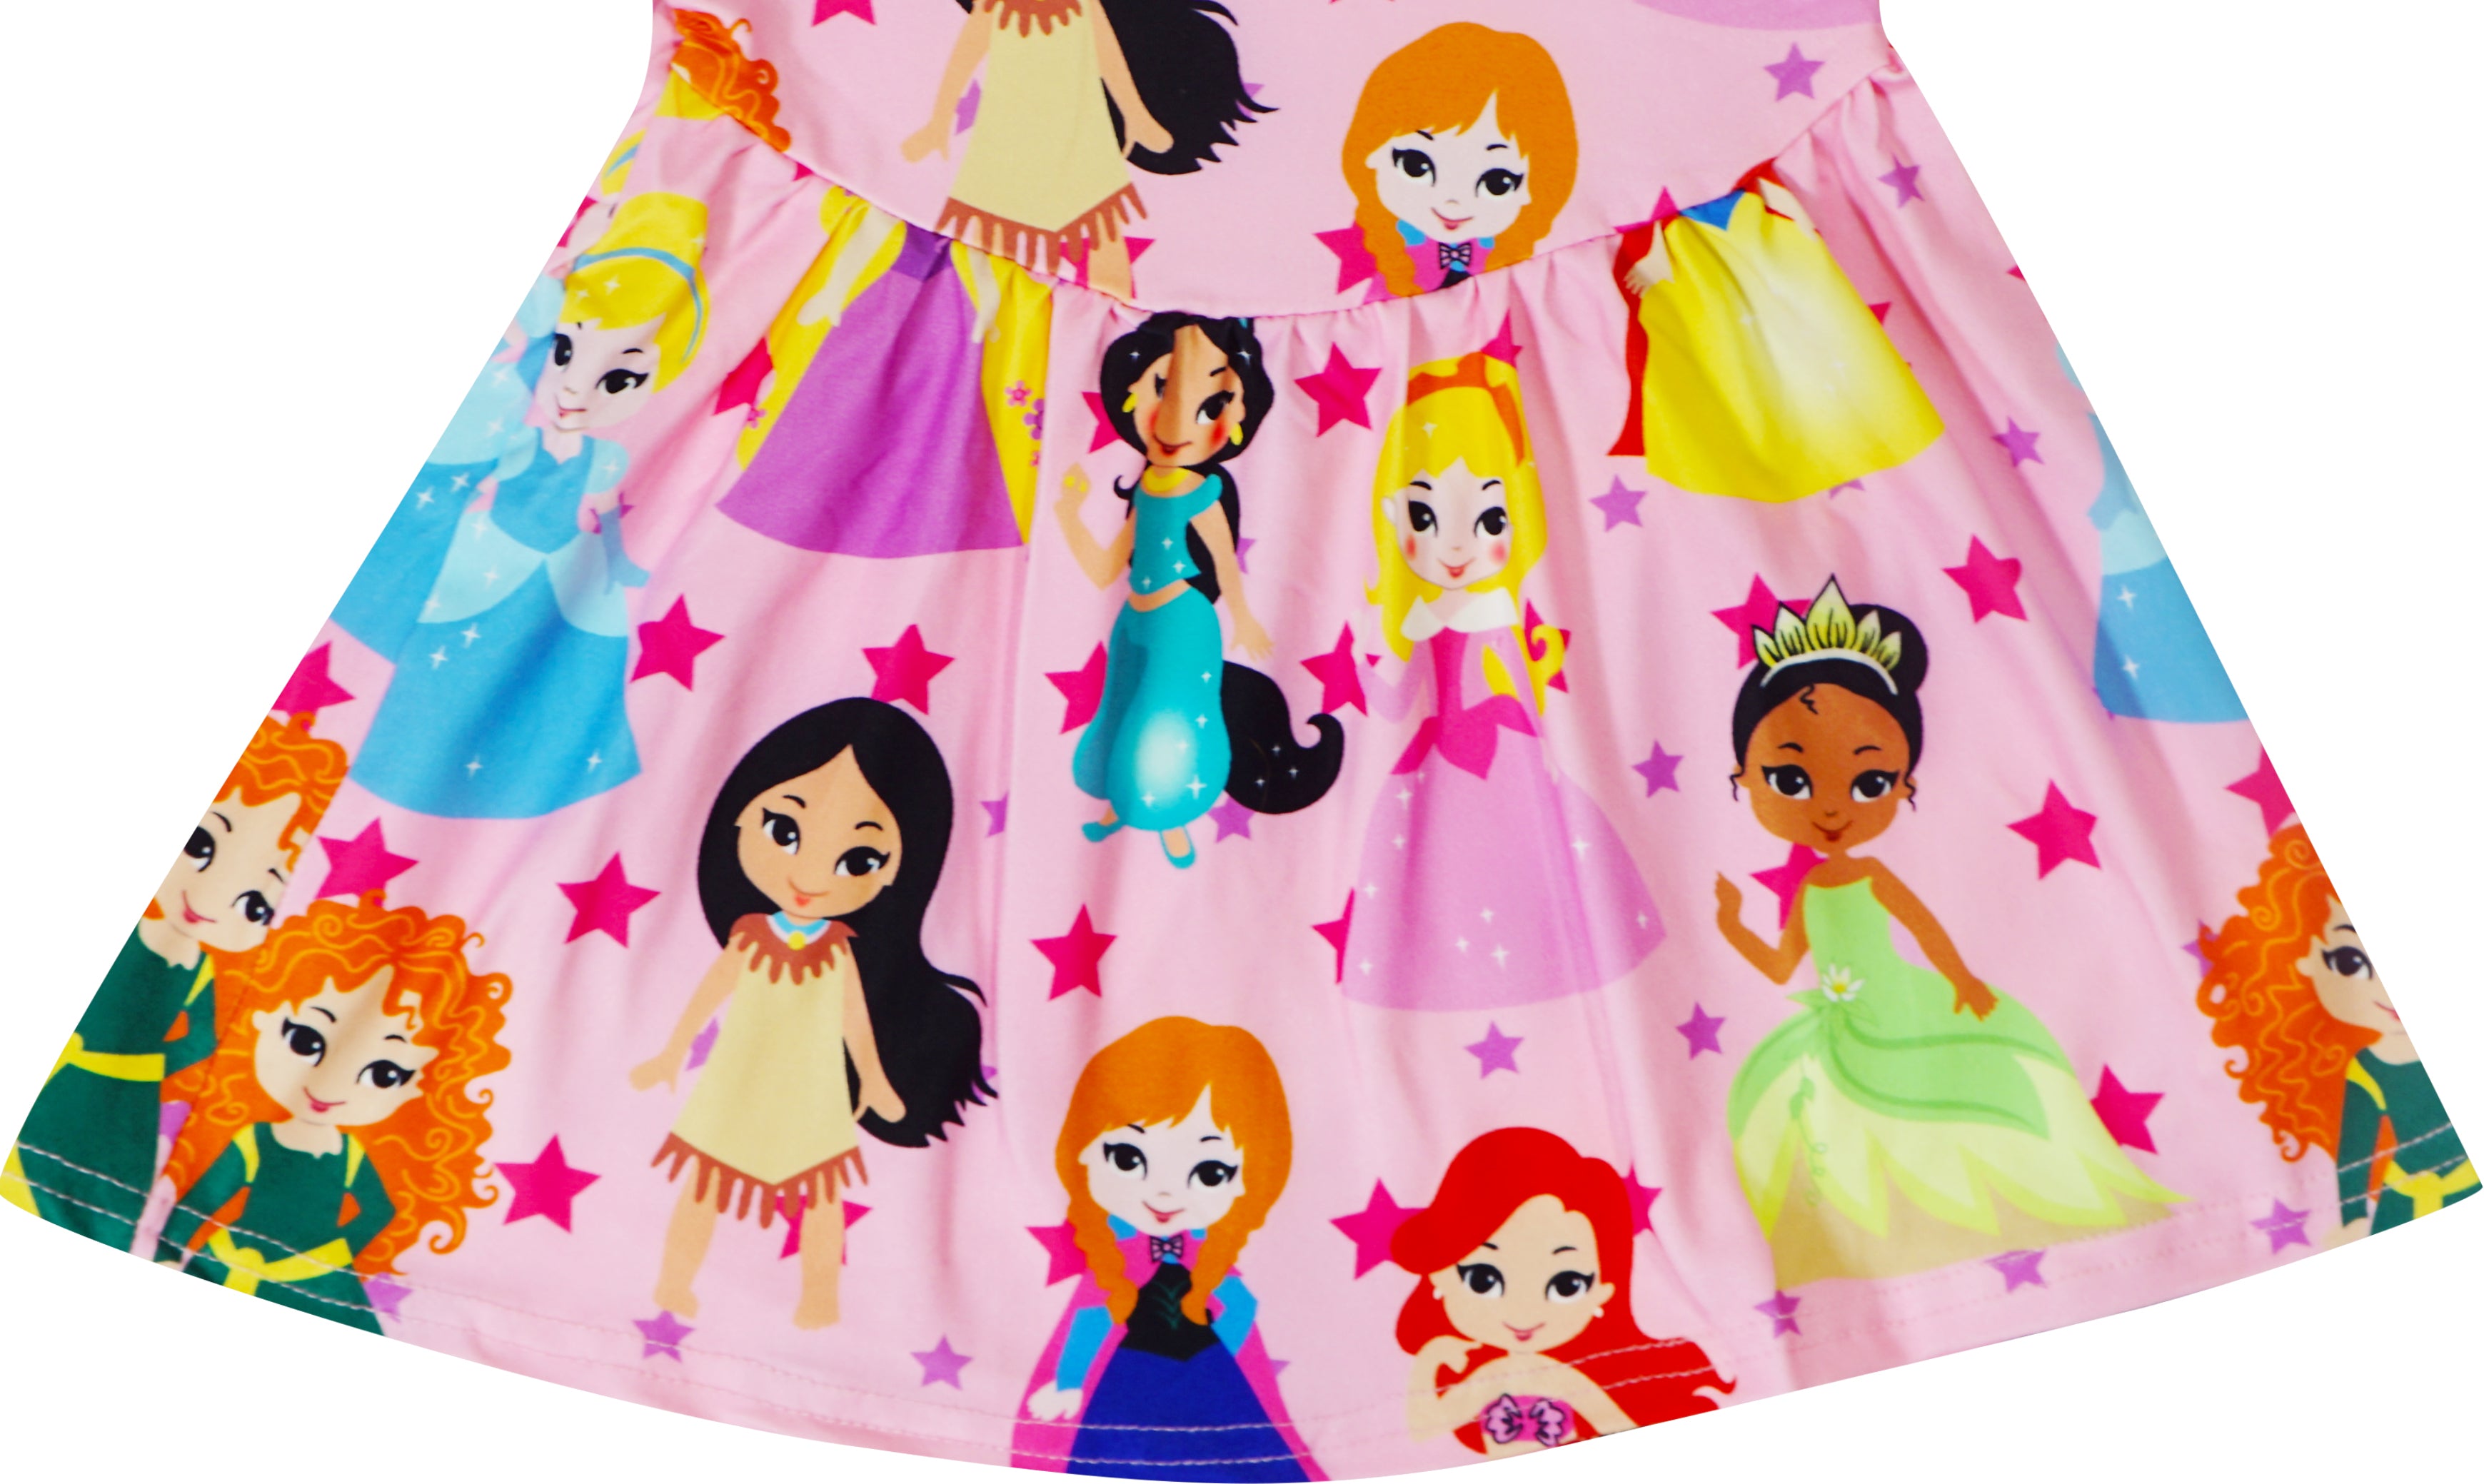 Girls Fairy Tale Princess Ruffle Top Shorts Set - Pink - Angeline Kids